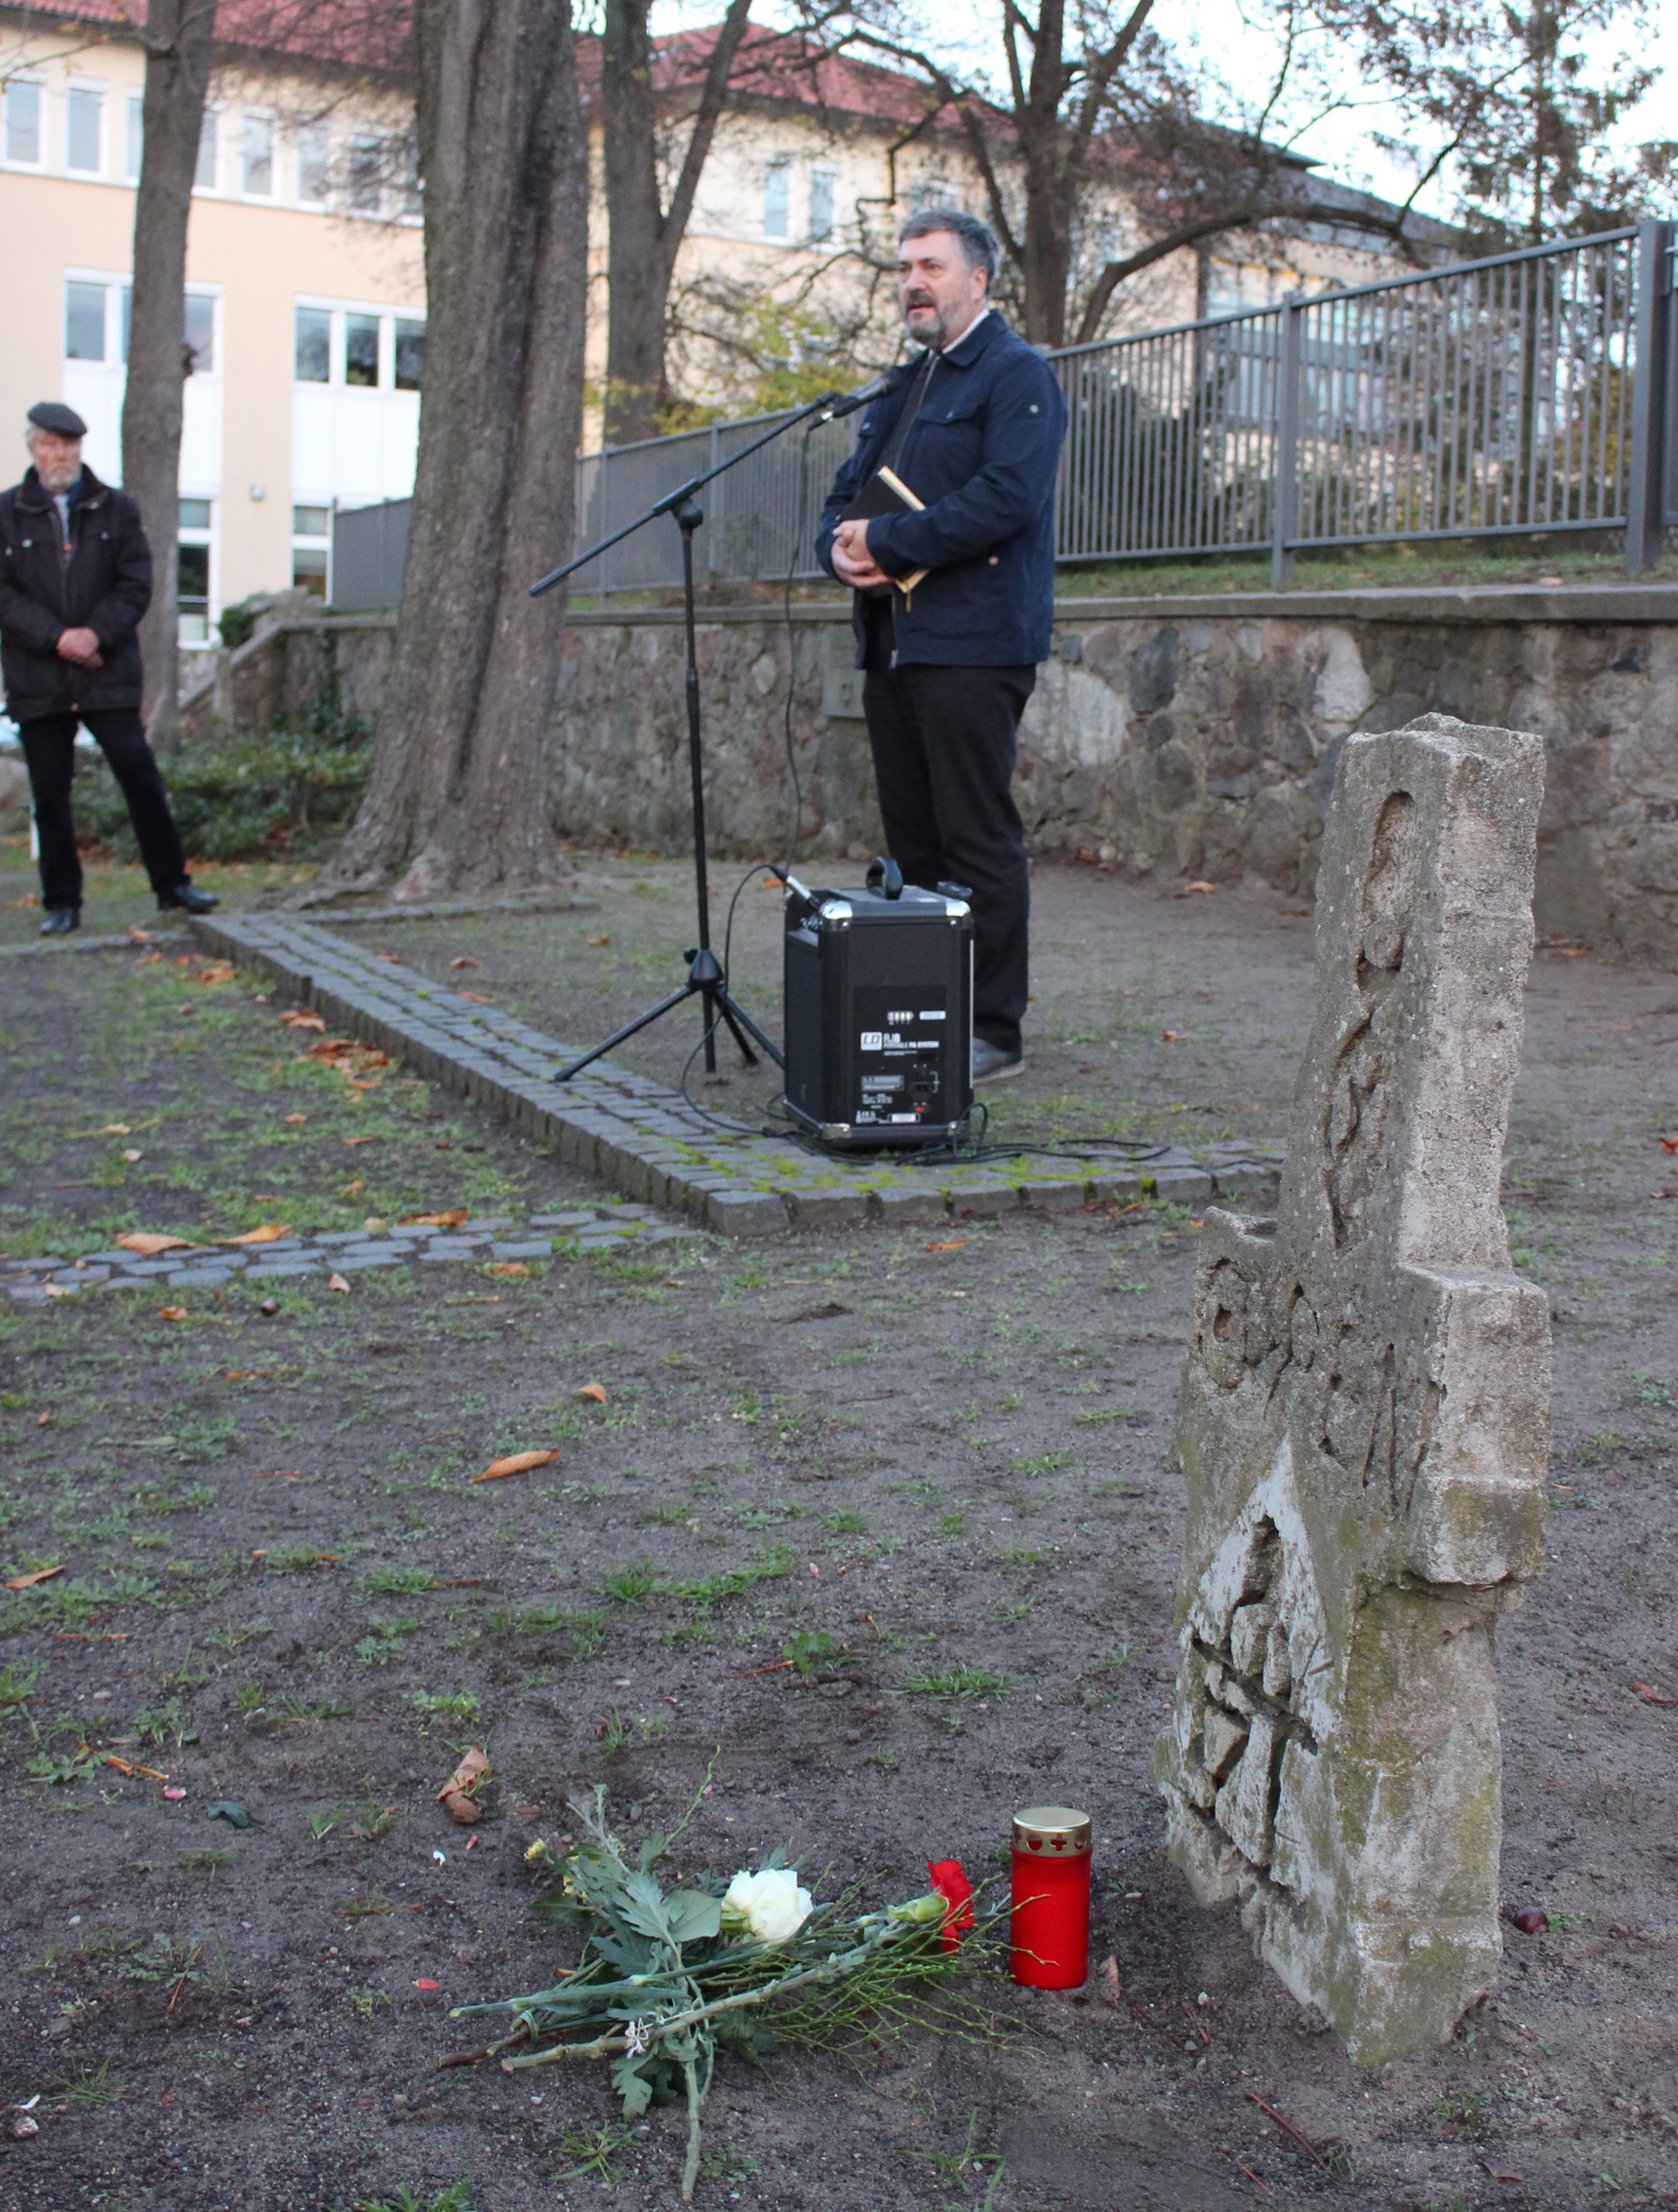 Gedenkveranstaltung für Opfer der Pogrome gegen Juden im November 1938 am jüdischen Friedhof, Pfarrer Tillmann Kuhn am Mikrofon